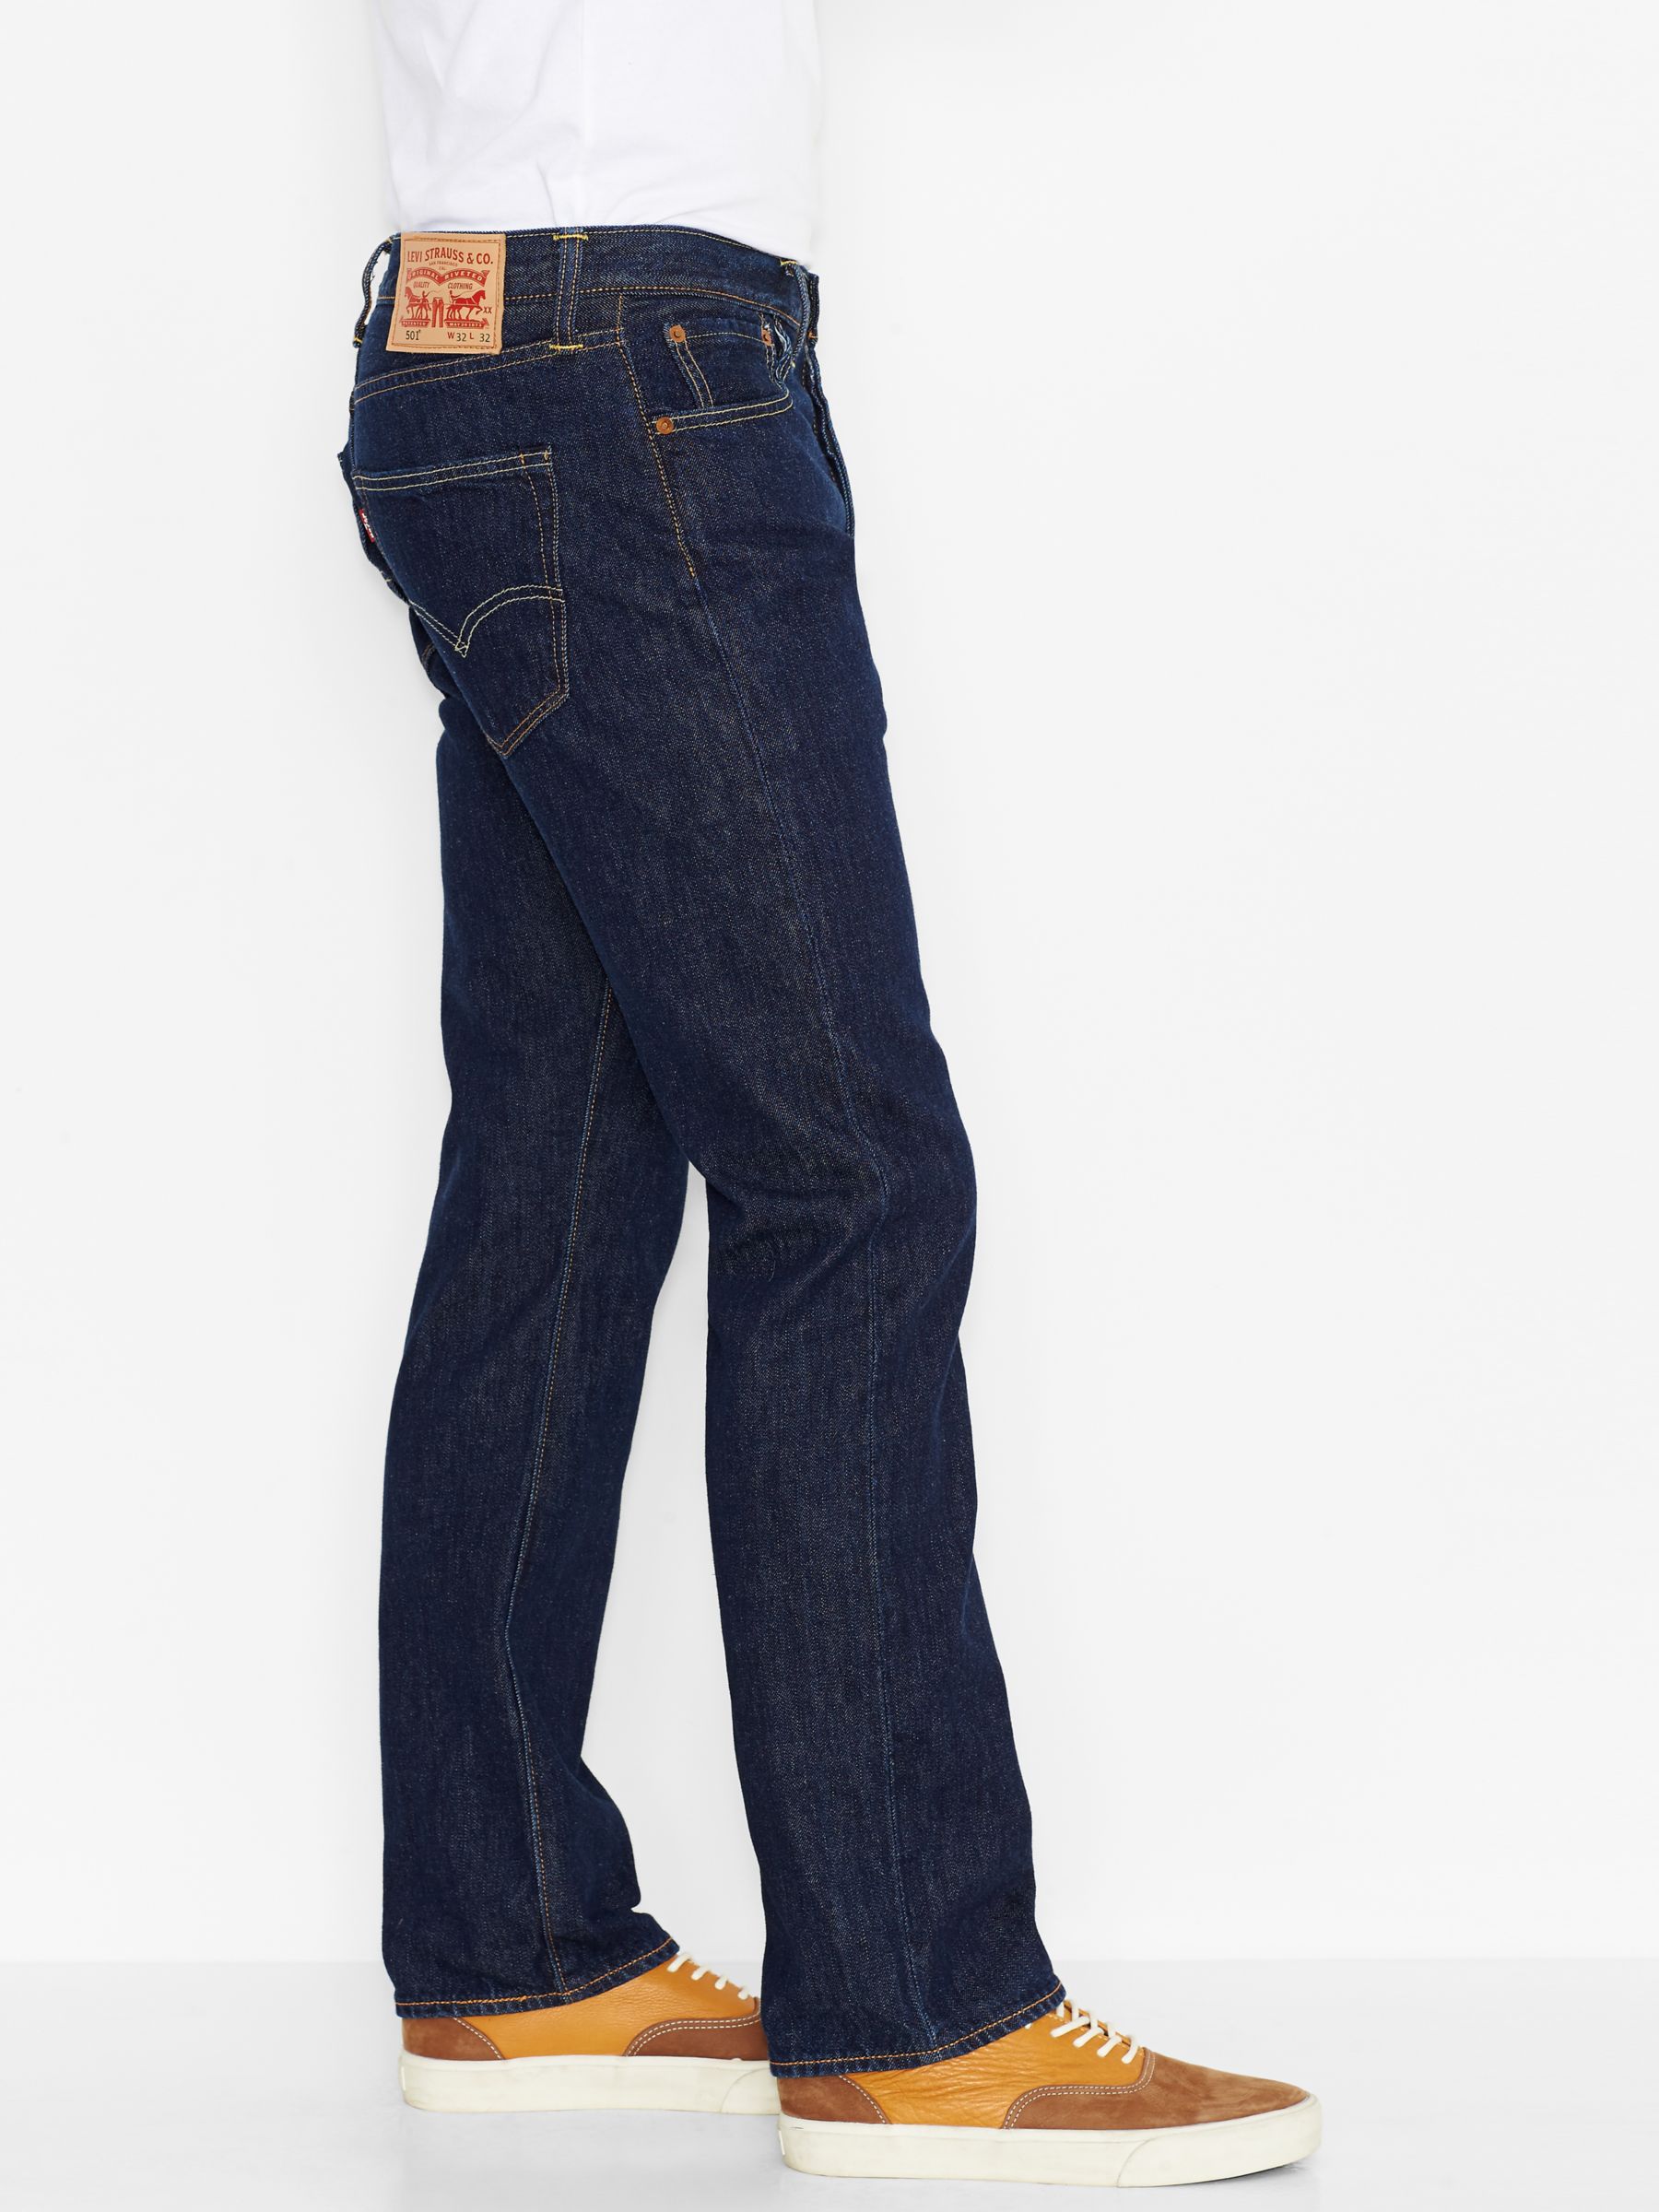 Buy Levi's 501 Original Straight Jeans, One Wash | John Lewis